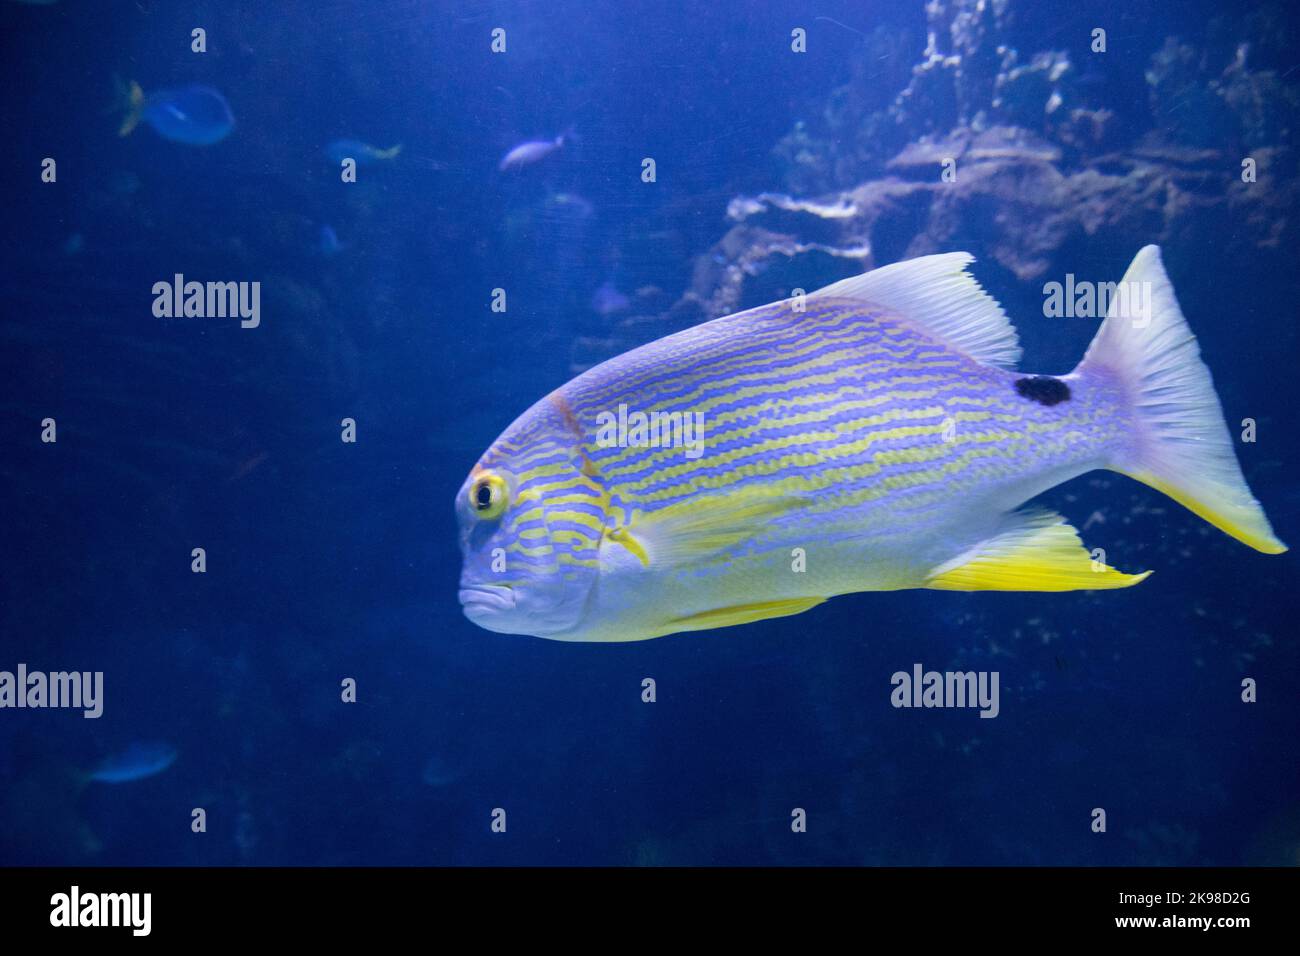 Sailfin snapper (Symphorichthys spilurus) Stock Photo